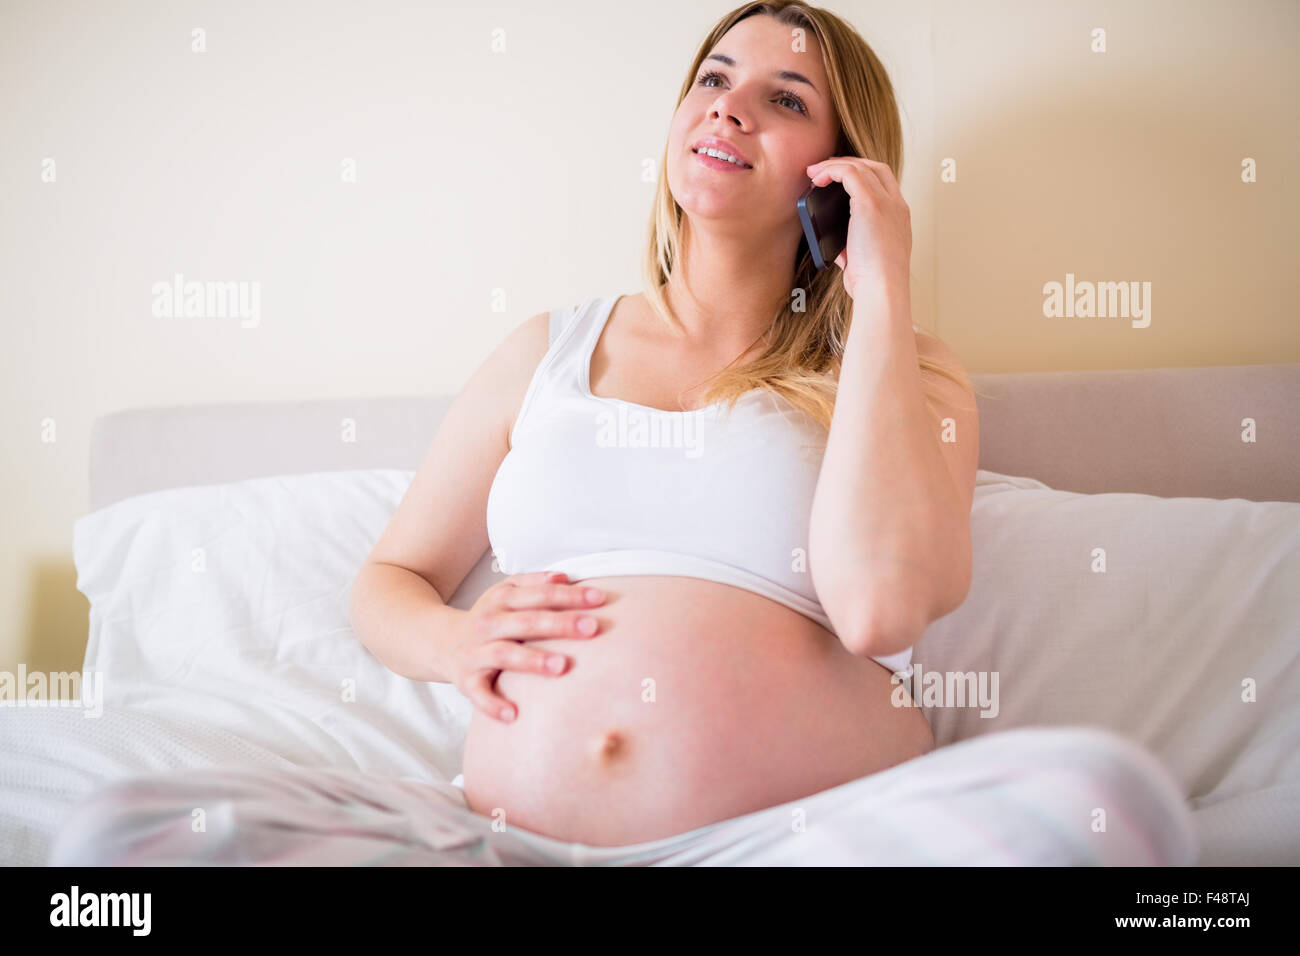 Pregnant woman having phone call Stock Photo